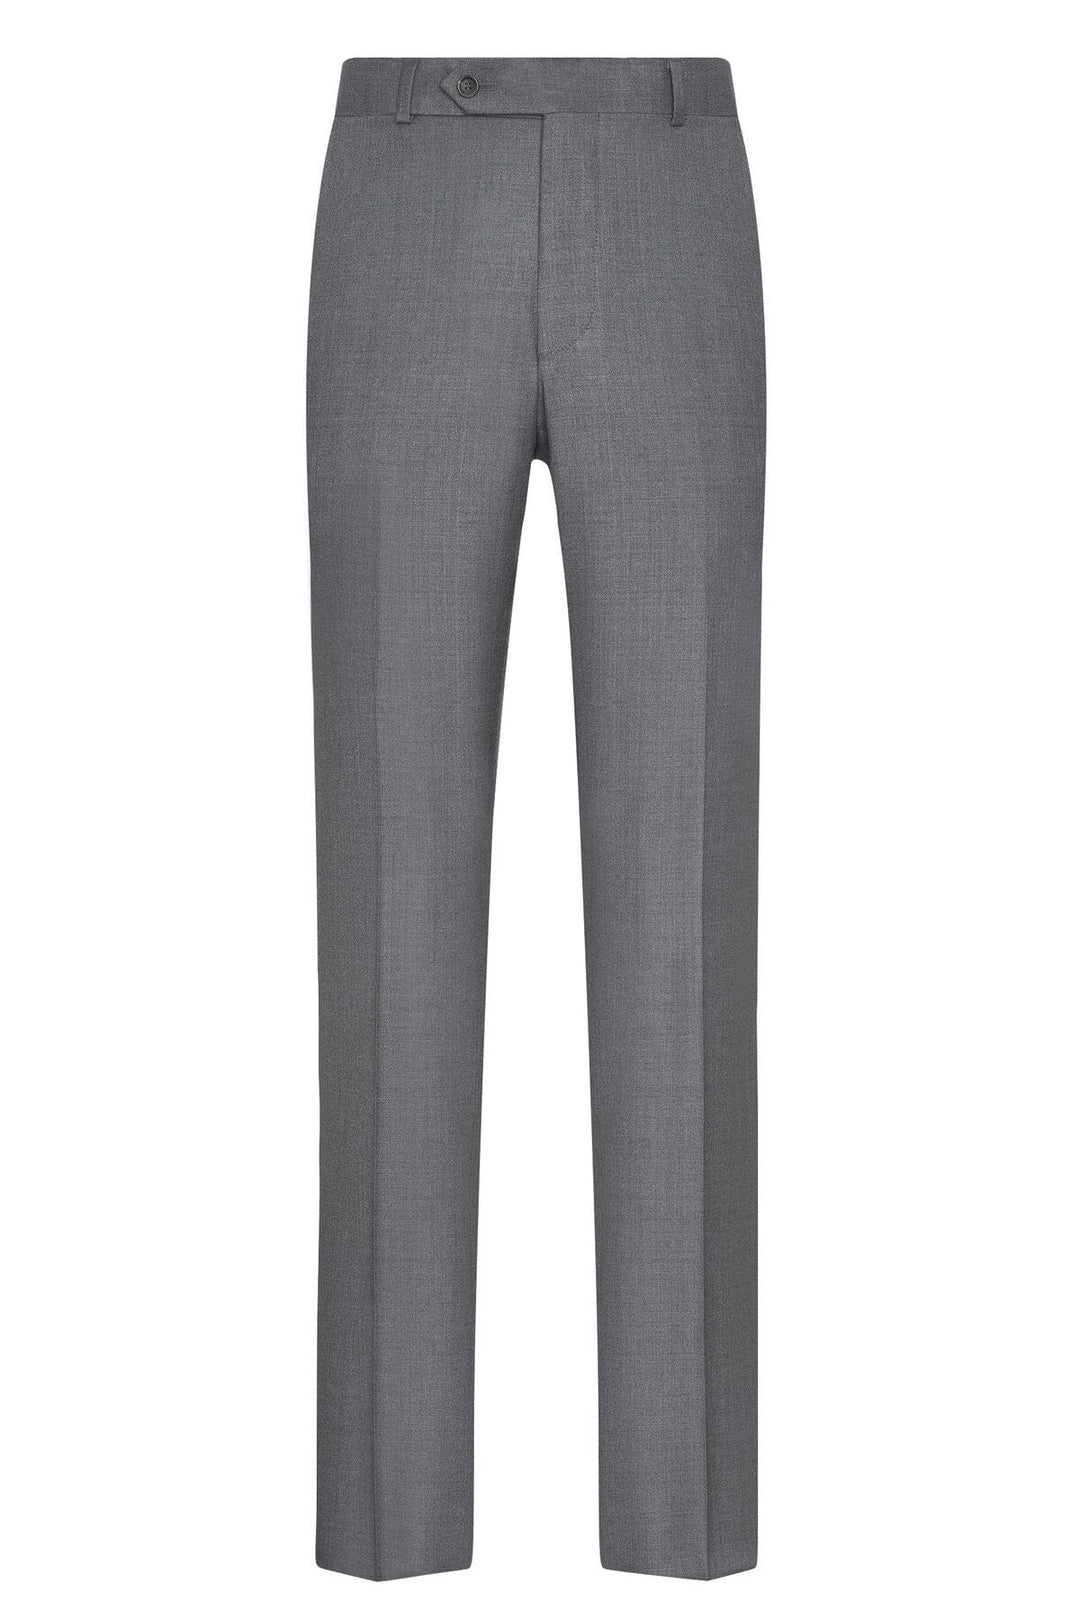 Pantalon gris en laine Samuelsohn 